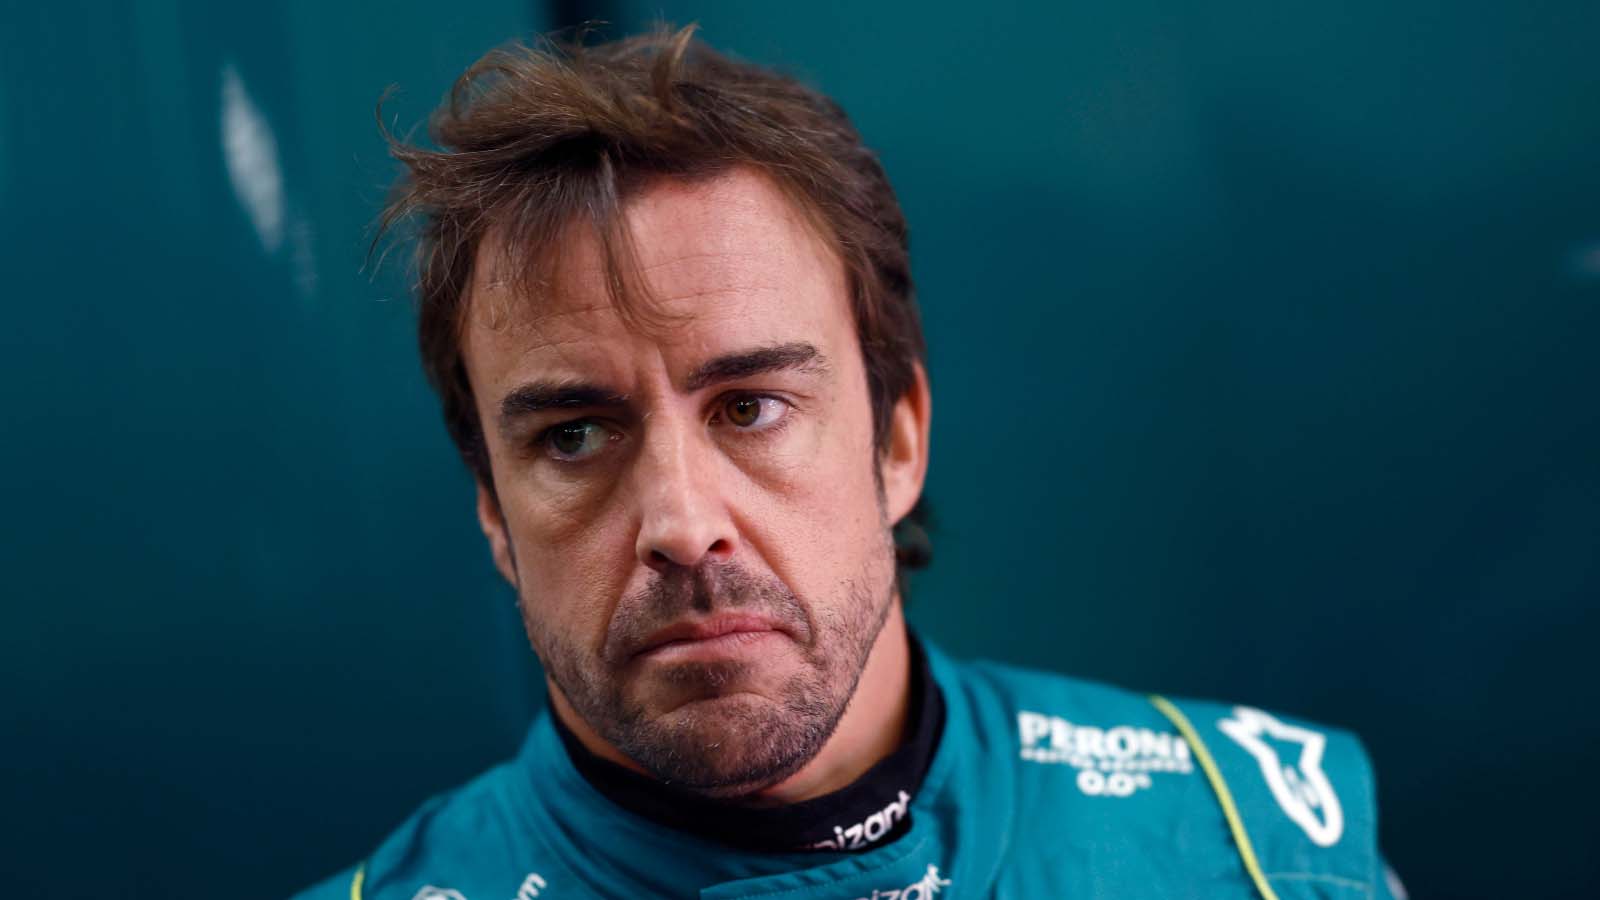 Fernando Alonso in the Aston Martin garage.